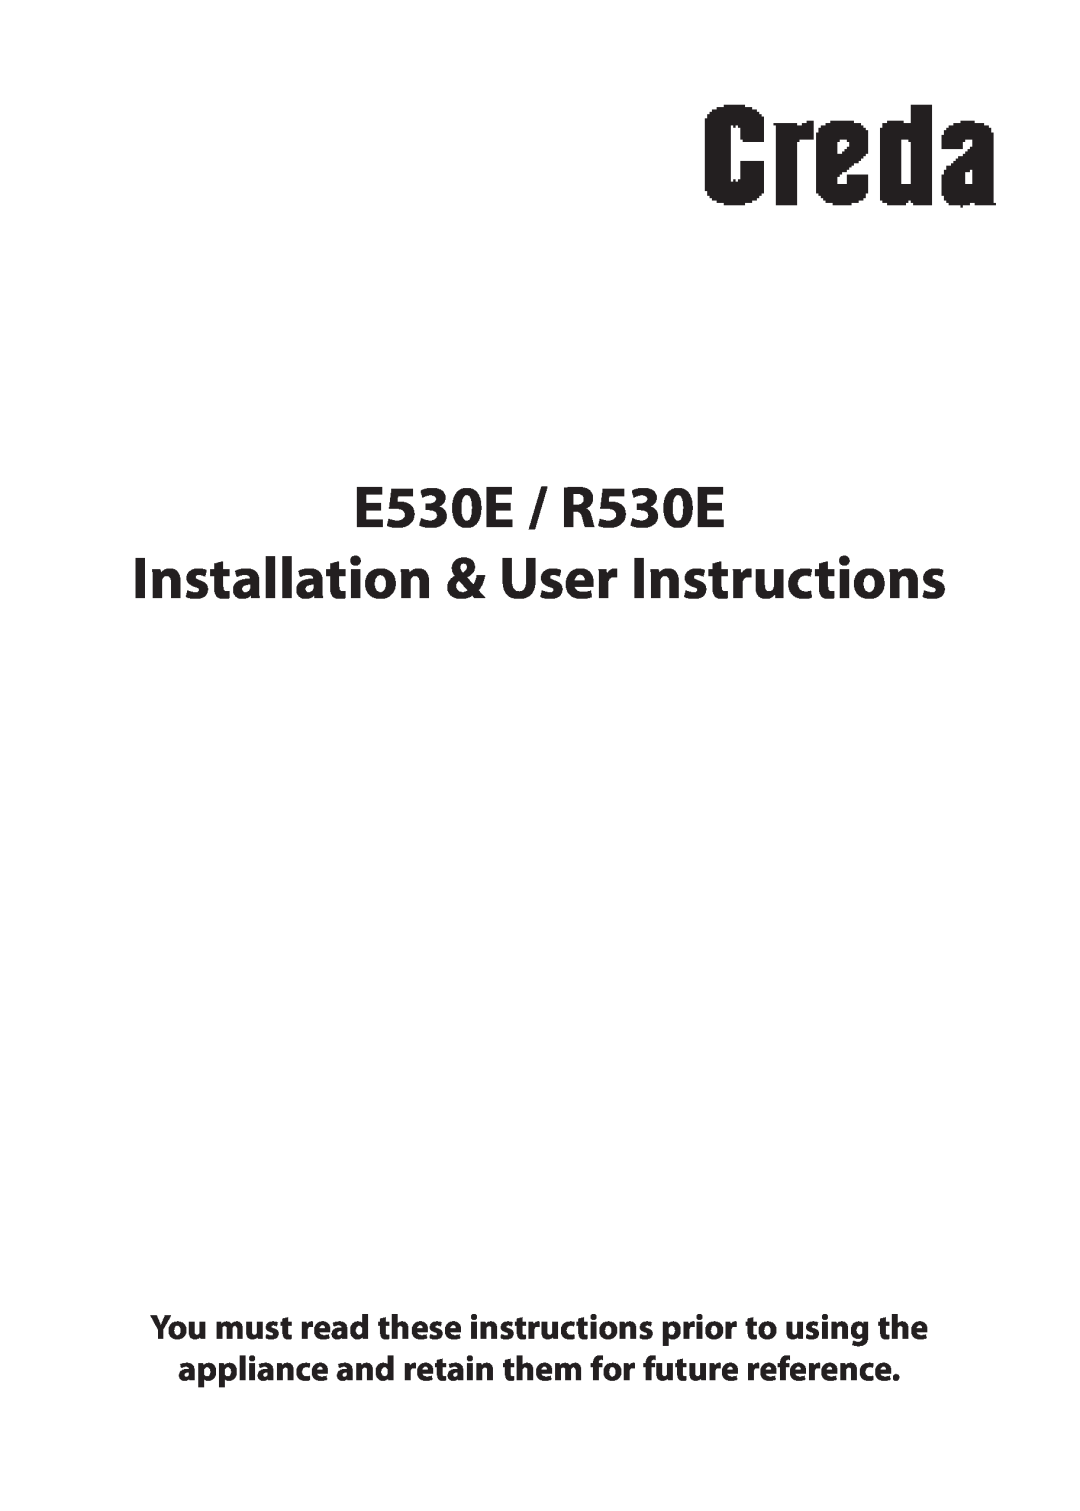 Creda E530E/R530E manual E530E / R530E Installation & User Instructions 